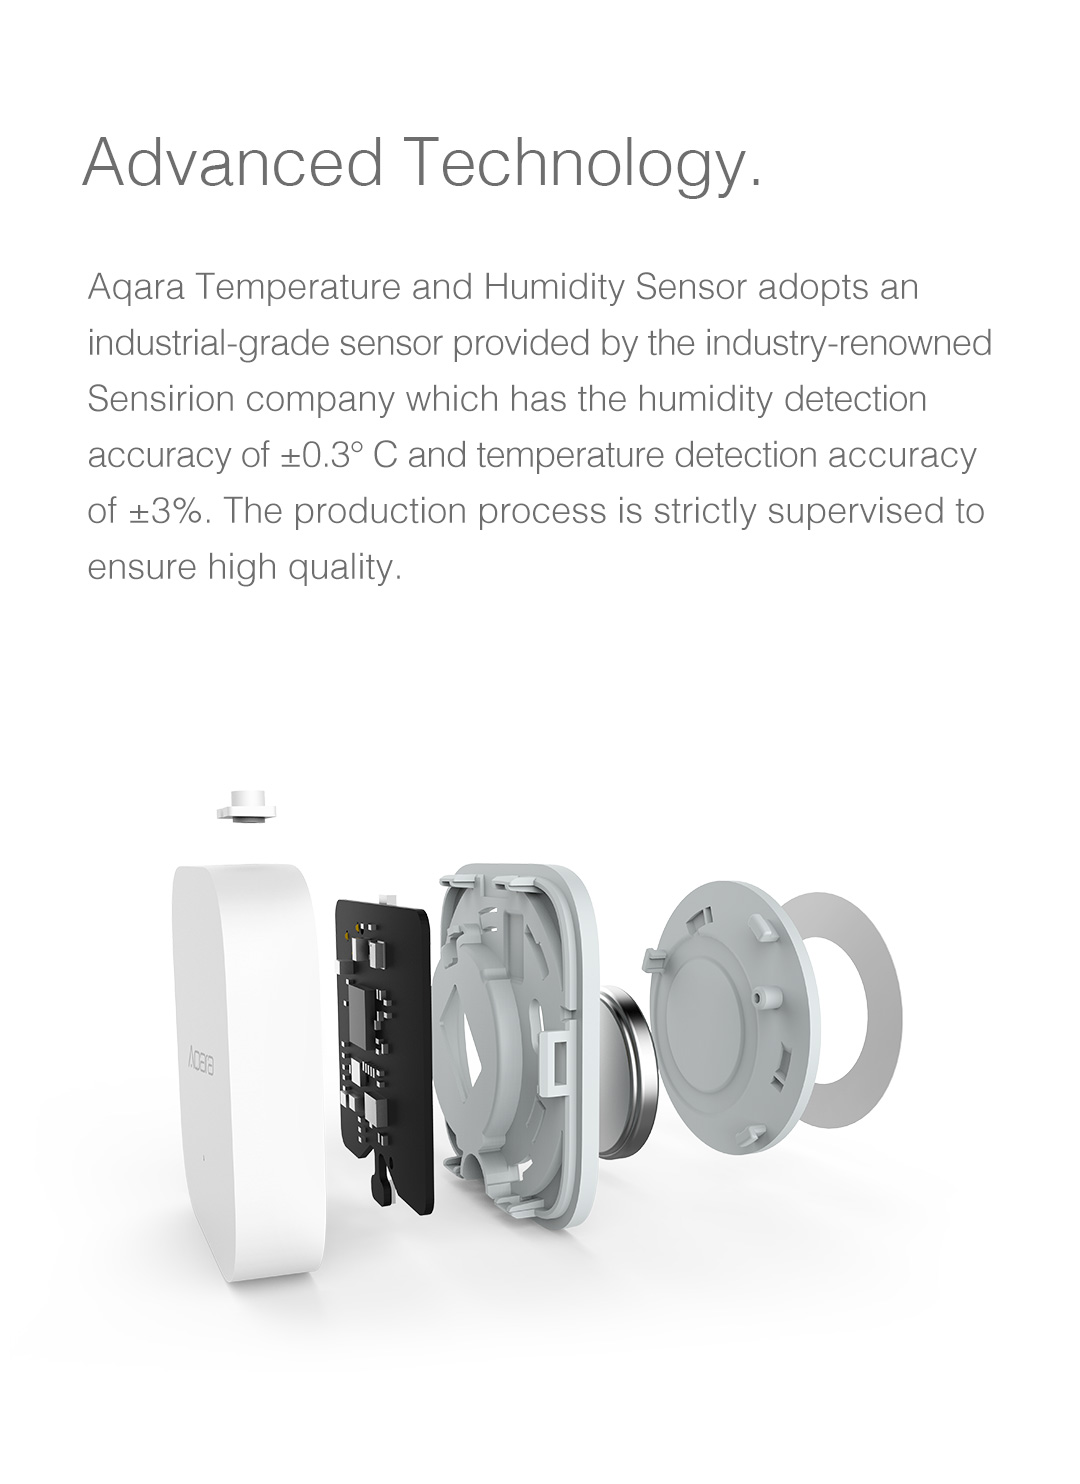 Aqara Temperature/Humidity detector adopts an industrial-grade sensor with high detection accuracy